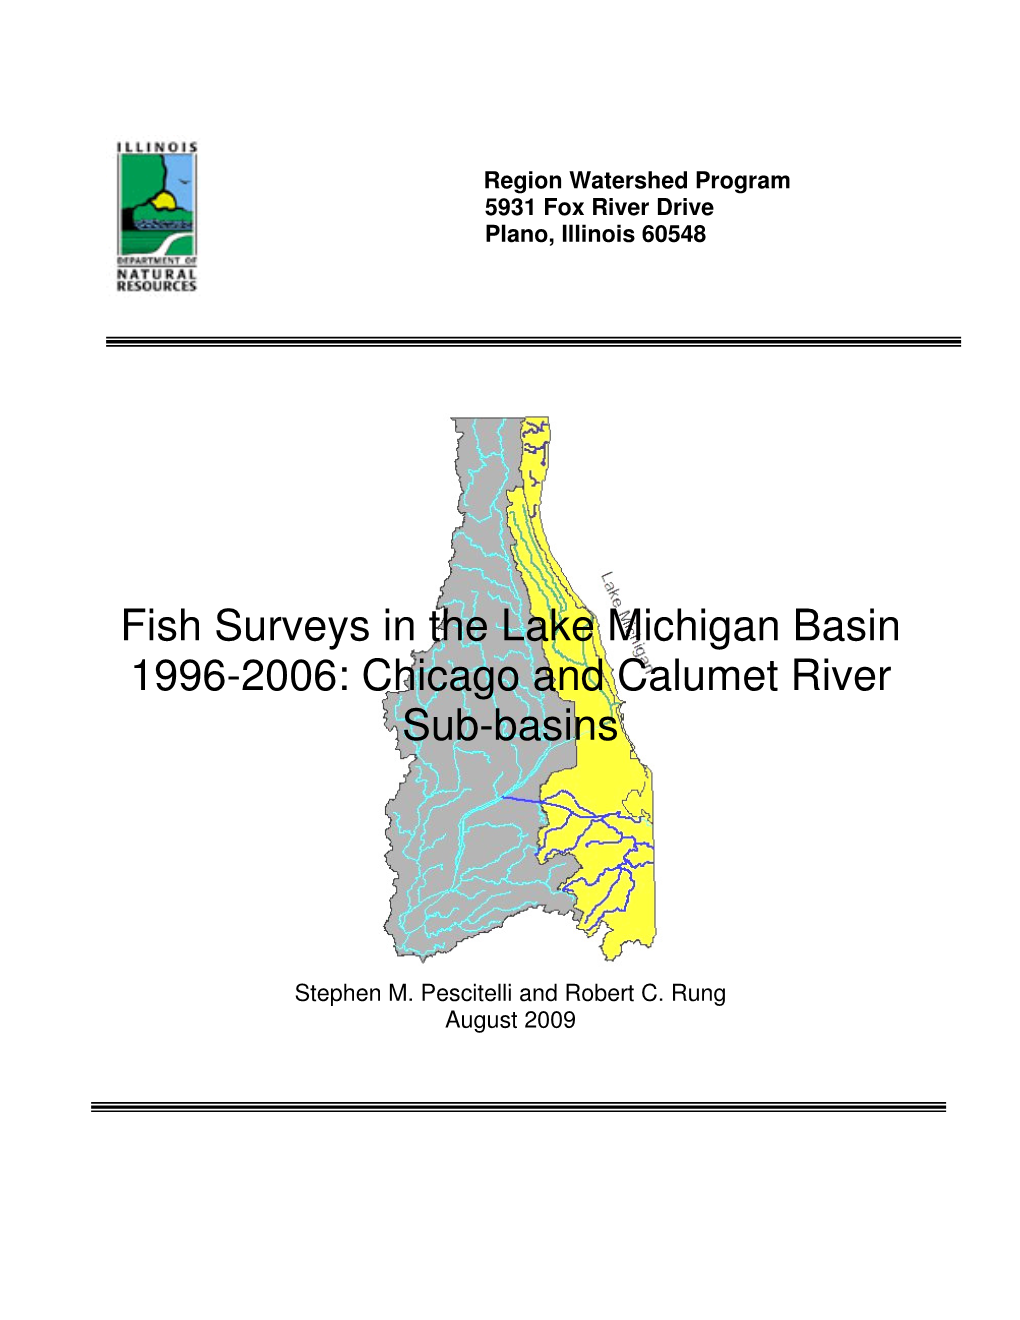 Fish Surveys in the Lake Michigan Basin 1996-2006: Chicago and Calumet River Sub-Basins